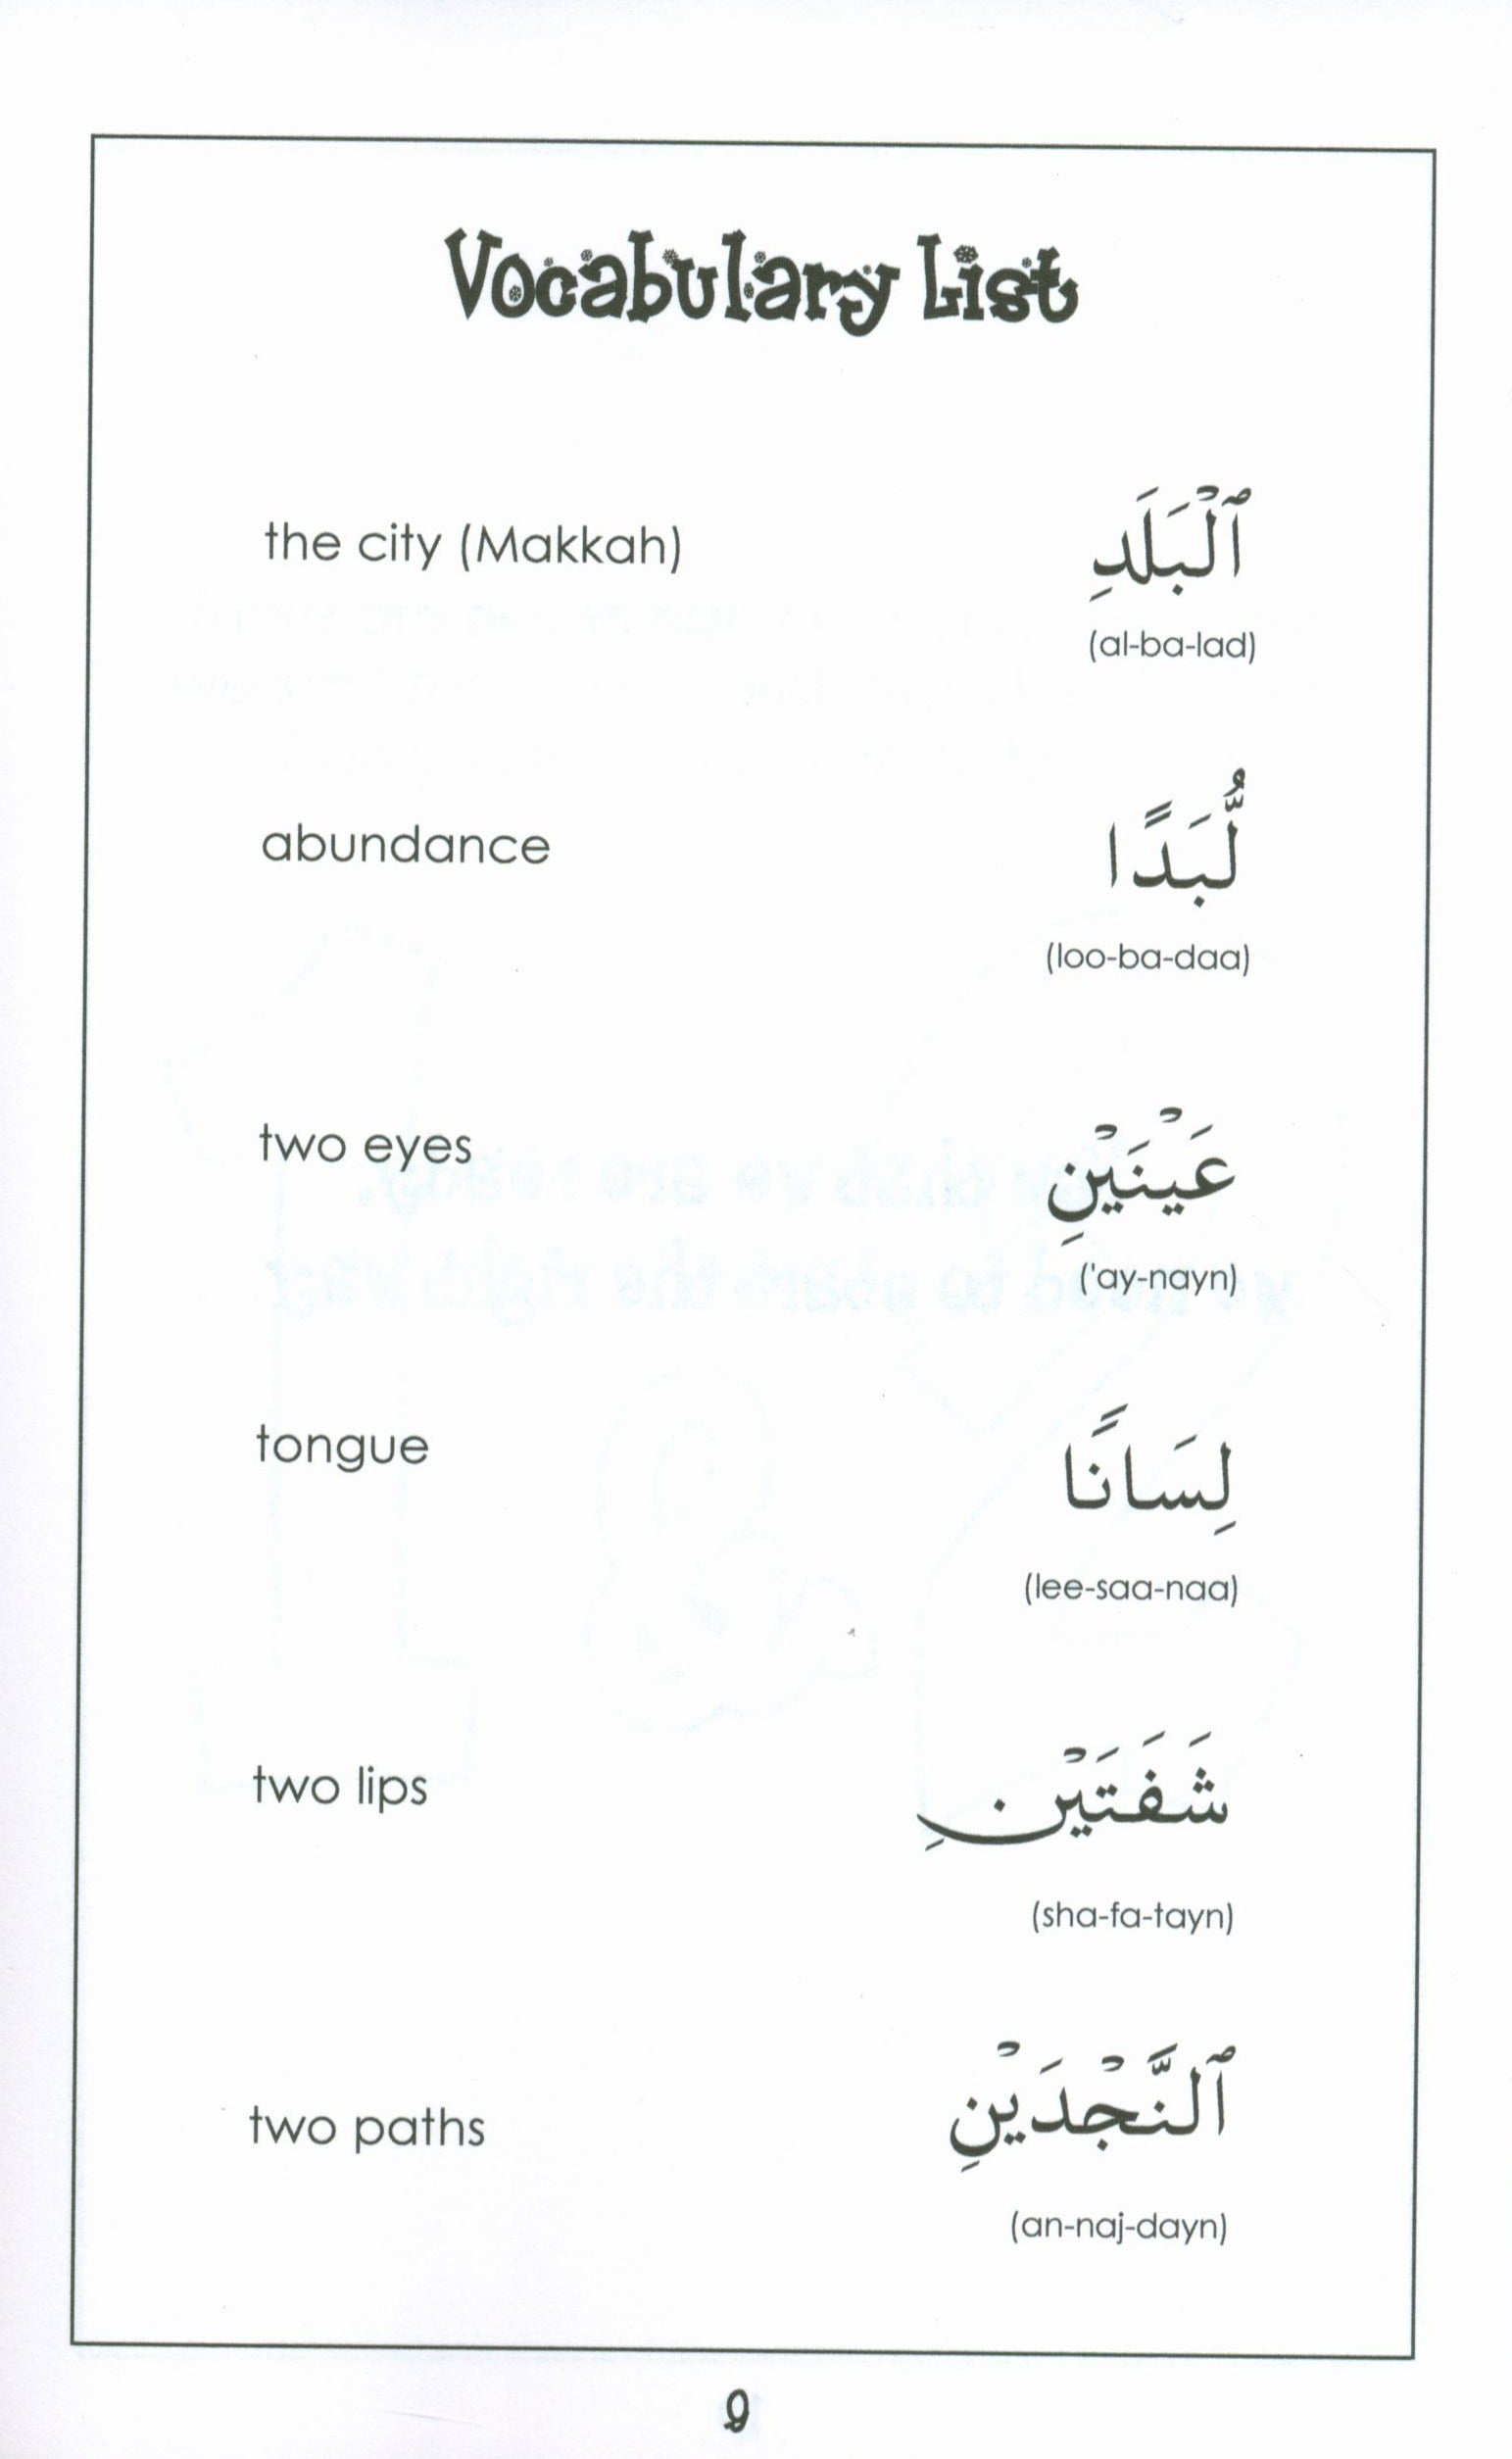 Mini Tafseer Book Suratul Balad (Surah 90)